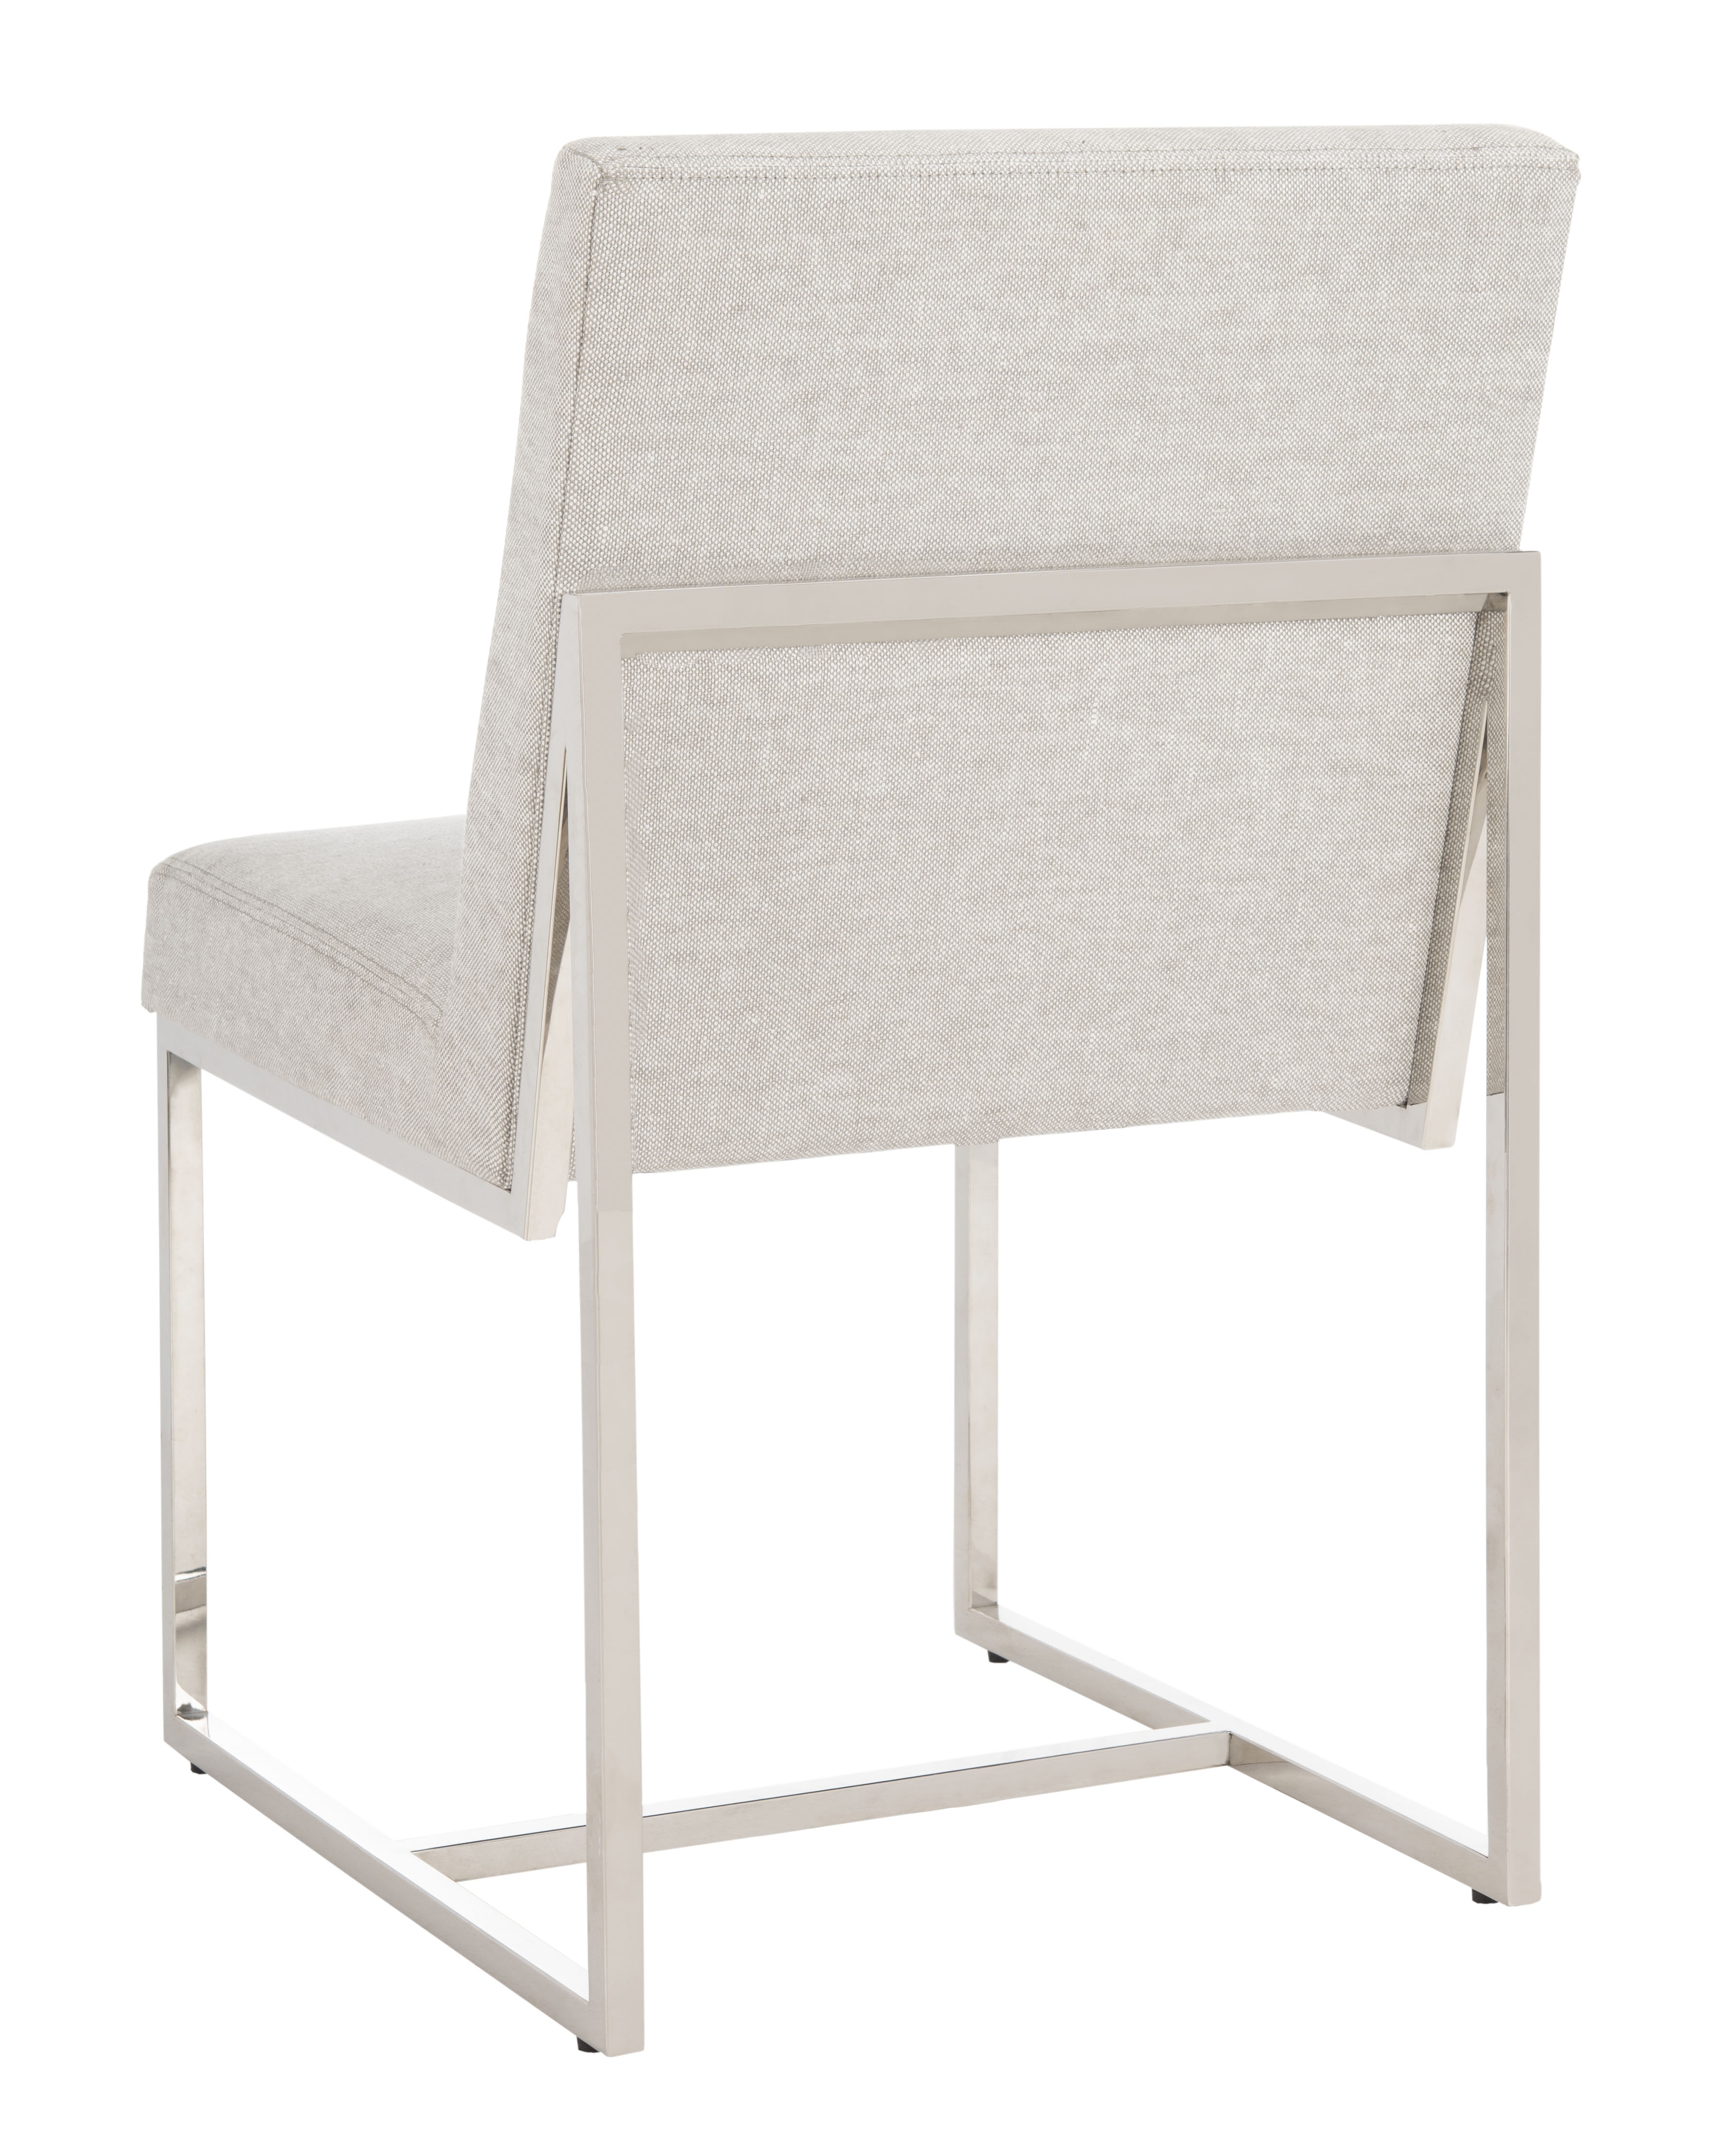 Lombardi Chrome Side Chair - Grey / White - Arlo Home - Image 4